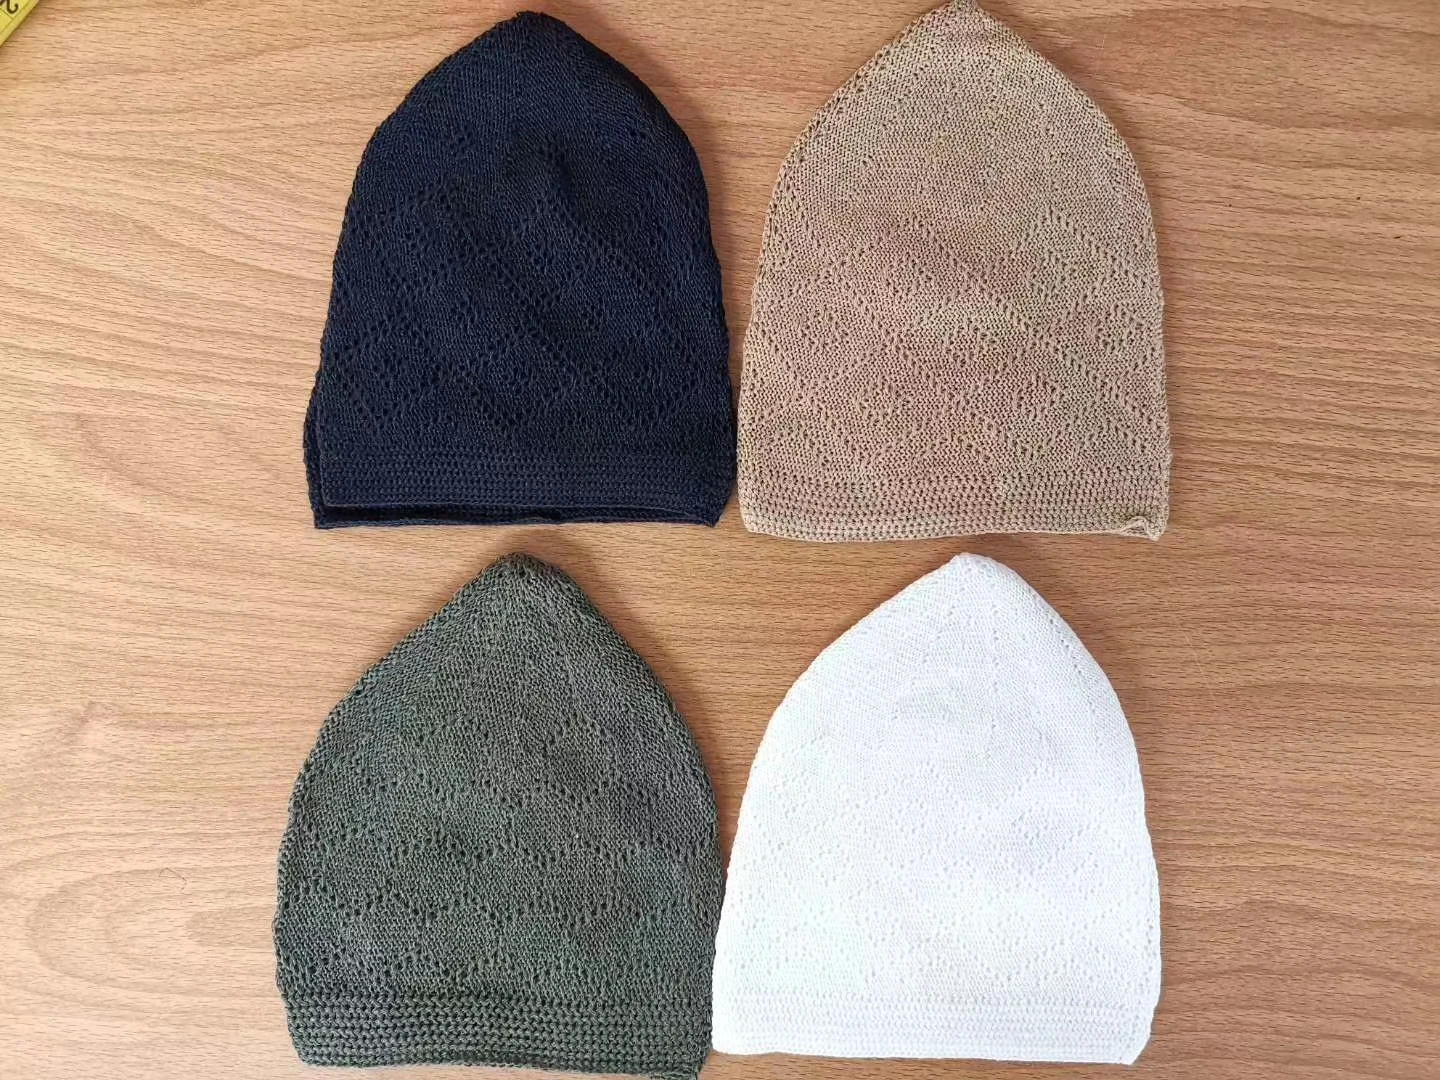 wholesale cheap price cotton yarn knitted cap man muslim caps crochet hat